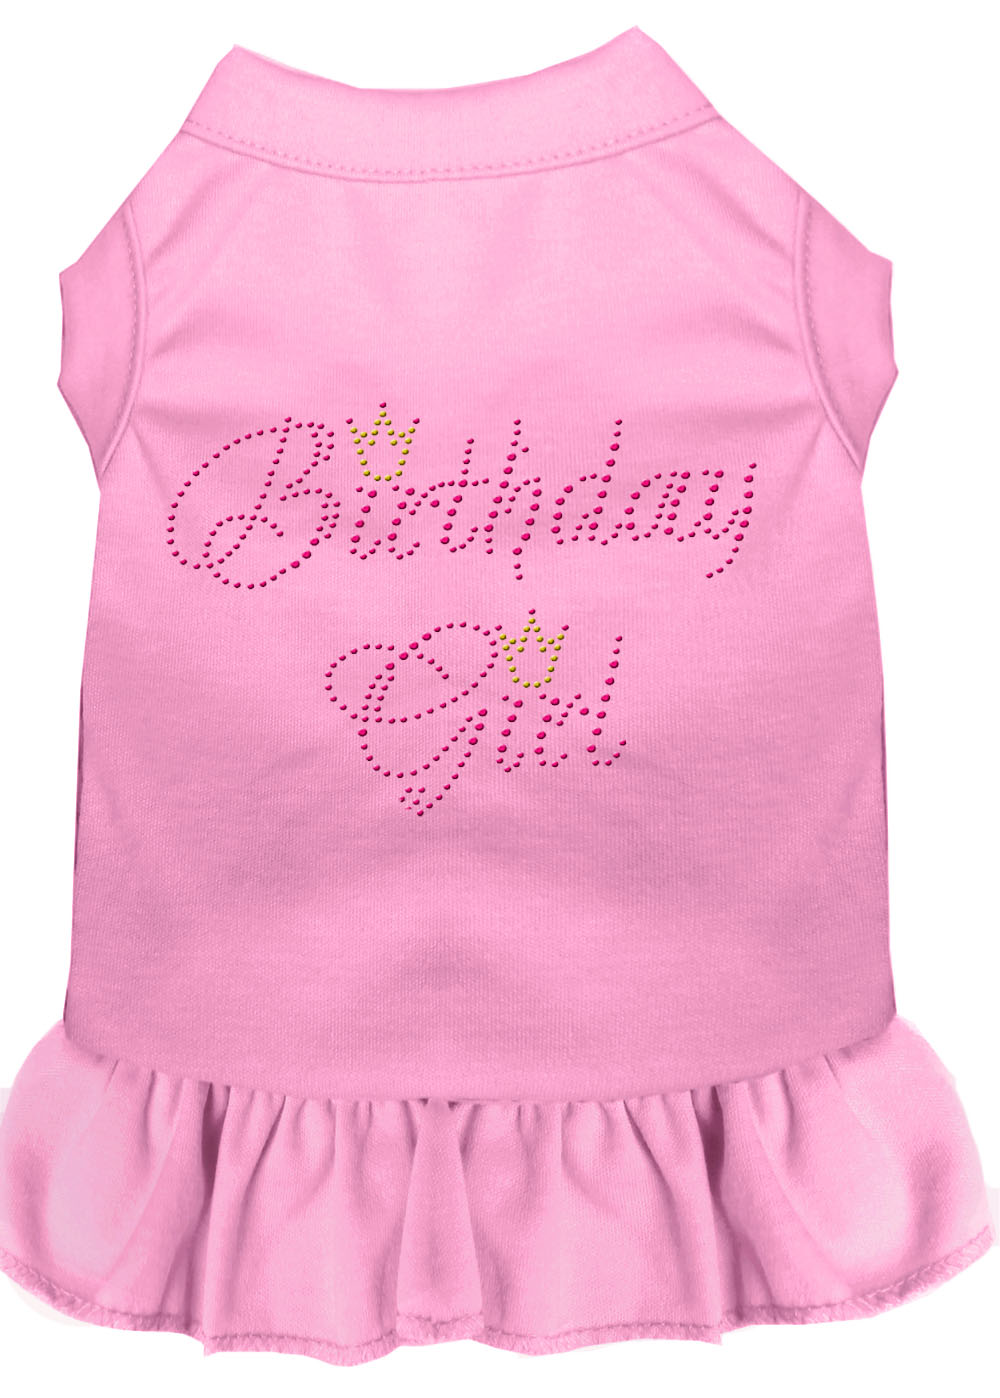 Birthday Girl Rhinestone Dress Light Pink XS